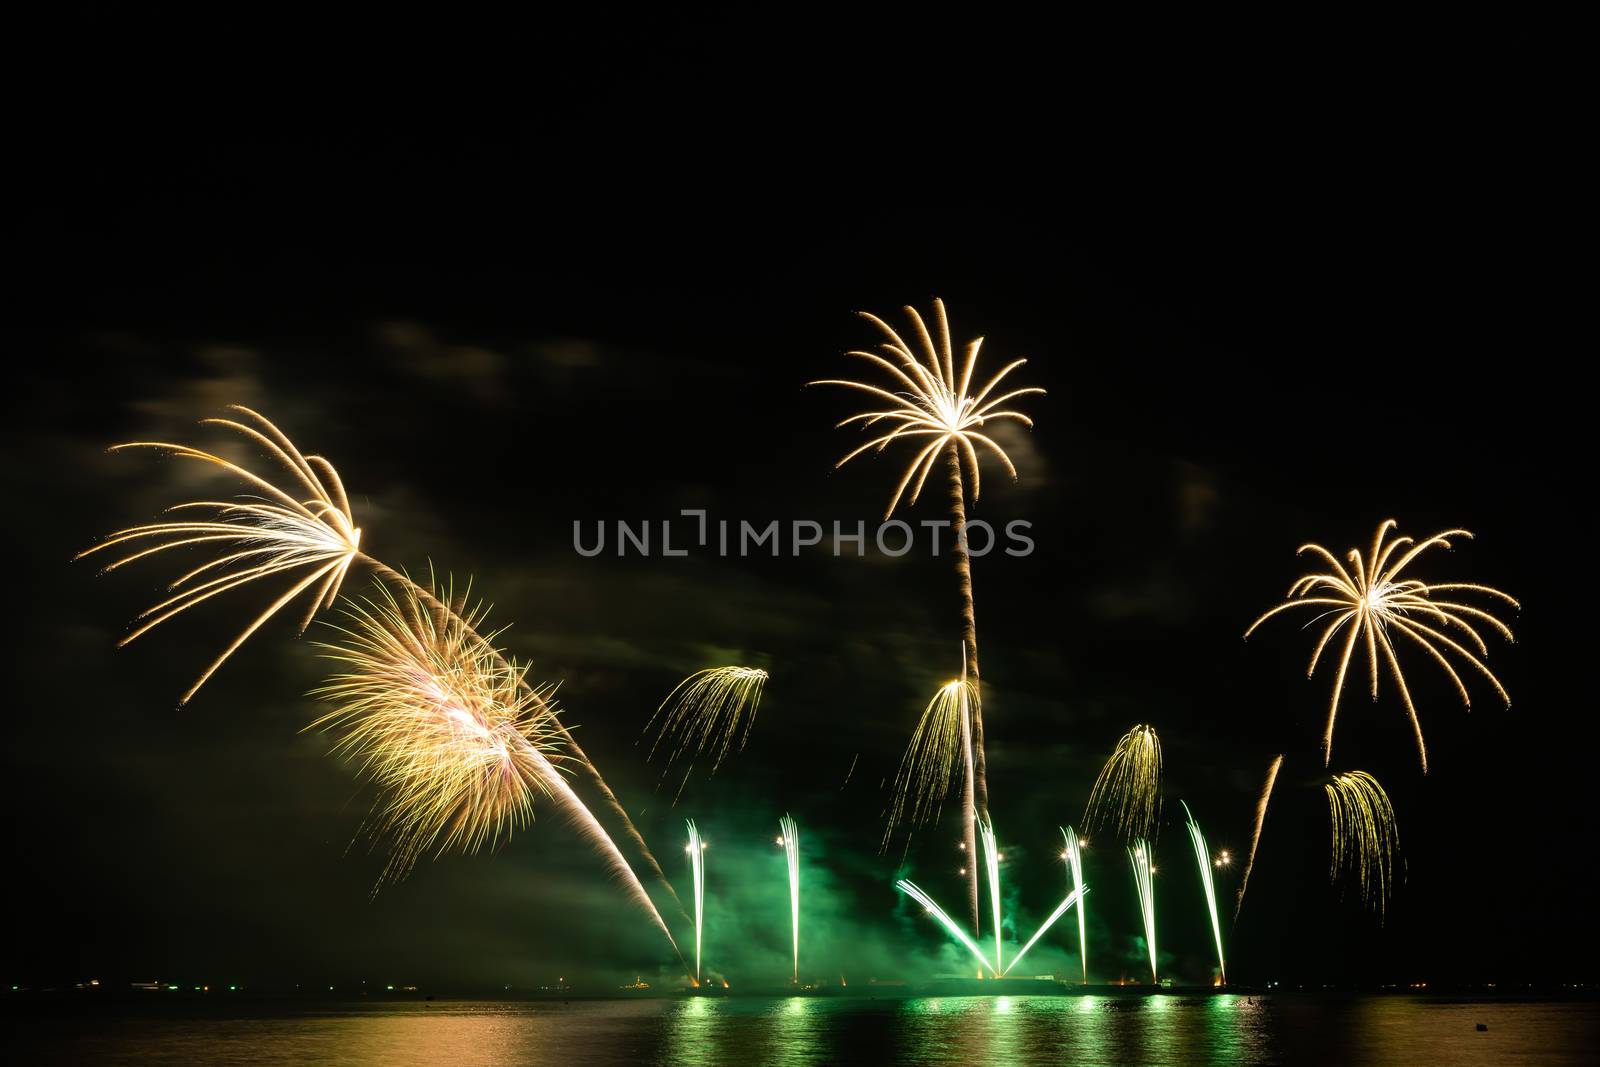 Firework in dark sky background by smuay